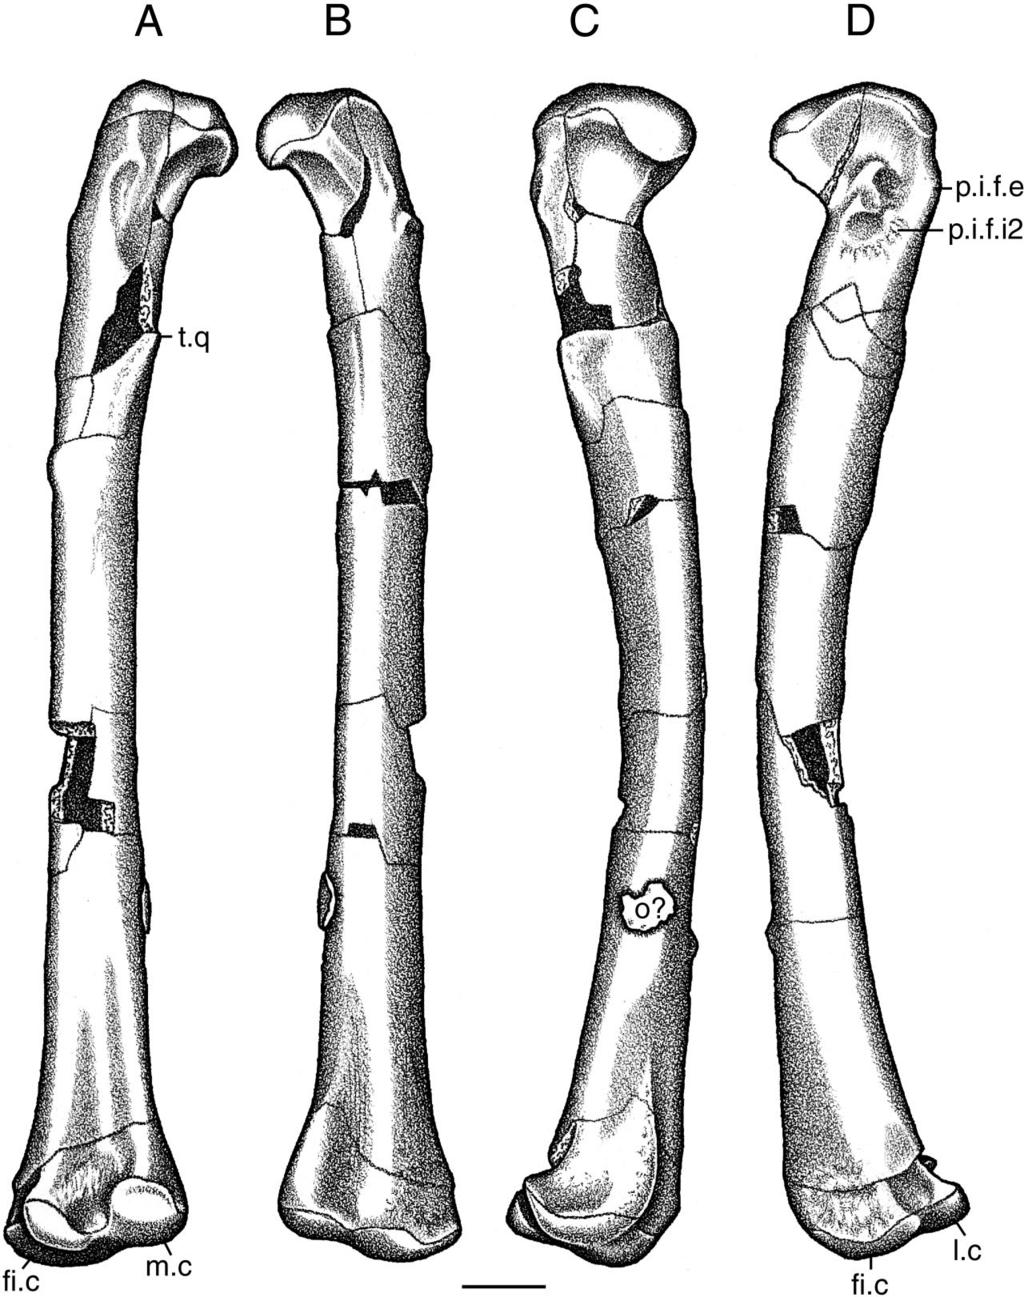 SUES ET AL. TRIASSIC CROCODYLOMORPH 337 FIGURE 6. Dromicosuchus grallator, UNC 15574 (holotype), left femur in A, posterior; B, anterior; C, medial; and D, lateral views. Scale bar equals 1 cm.